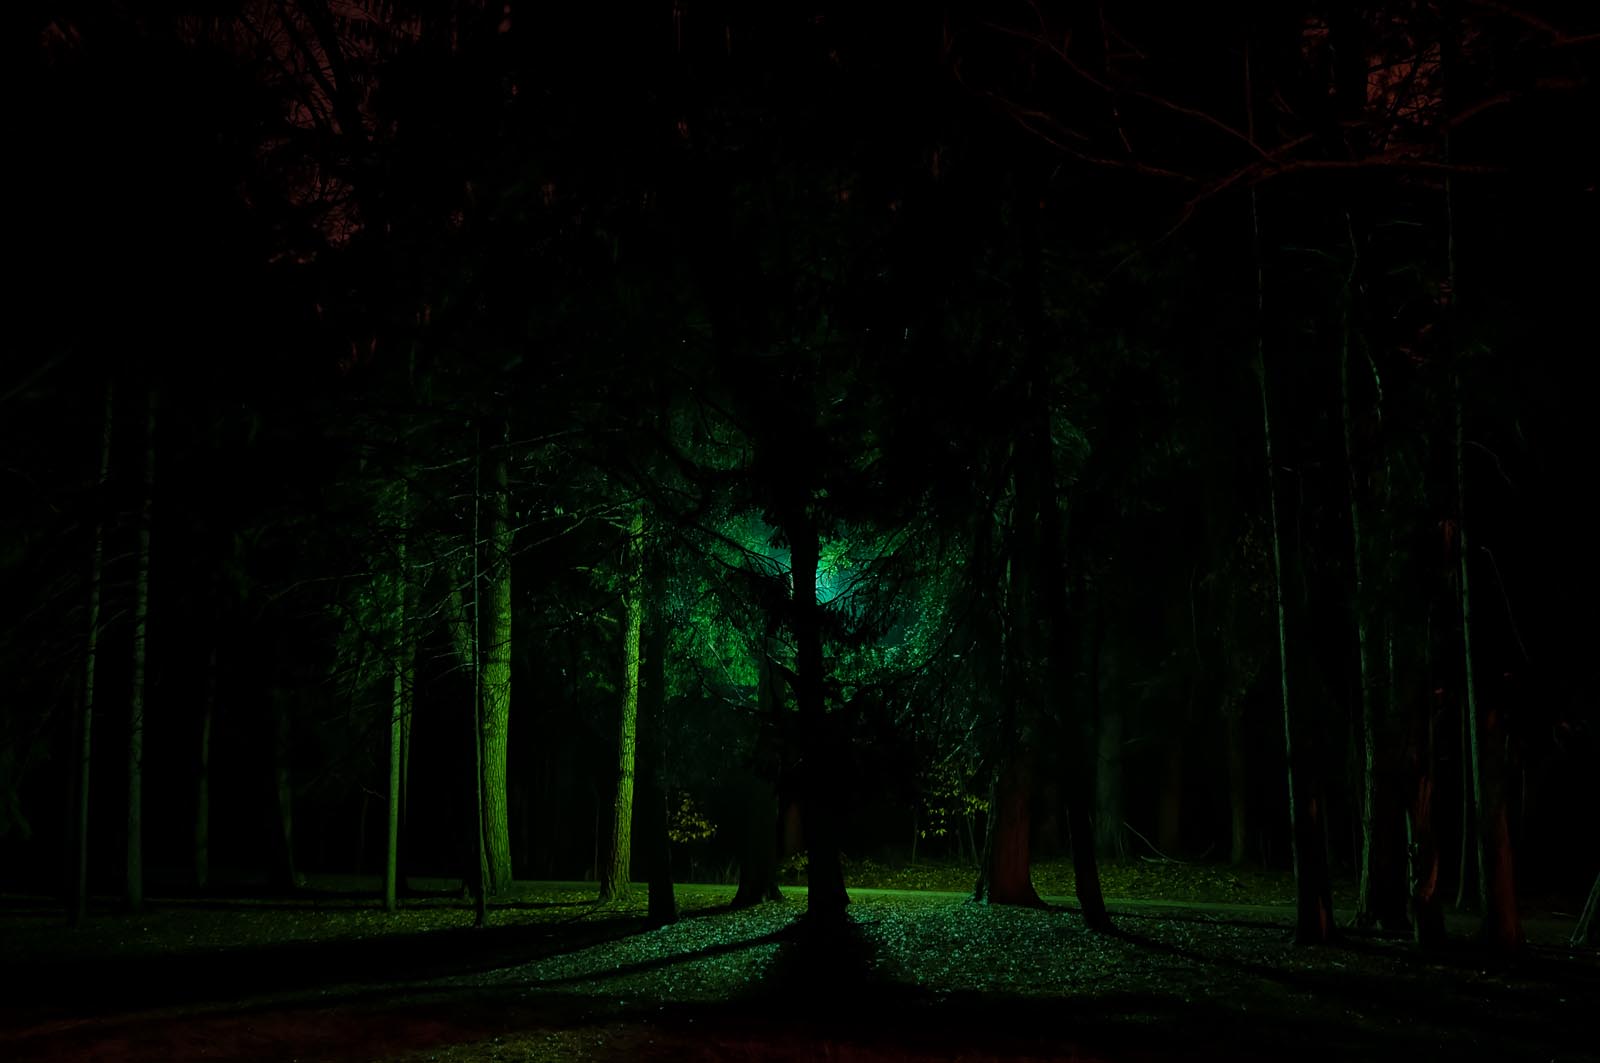 Lyrical Night Landscape Photographs: Green Tree